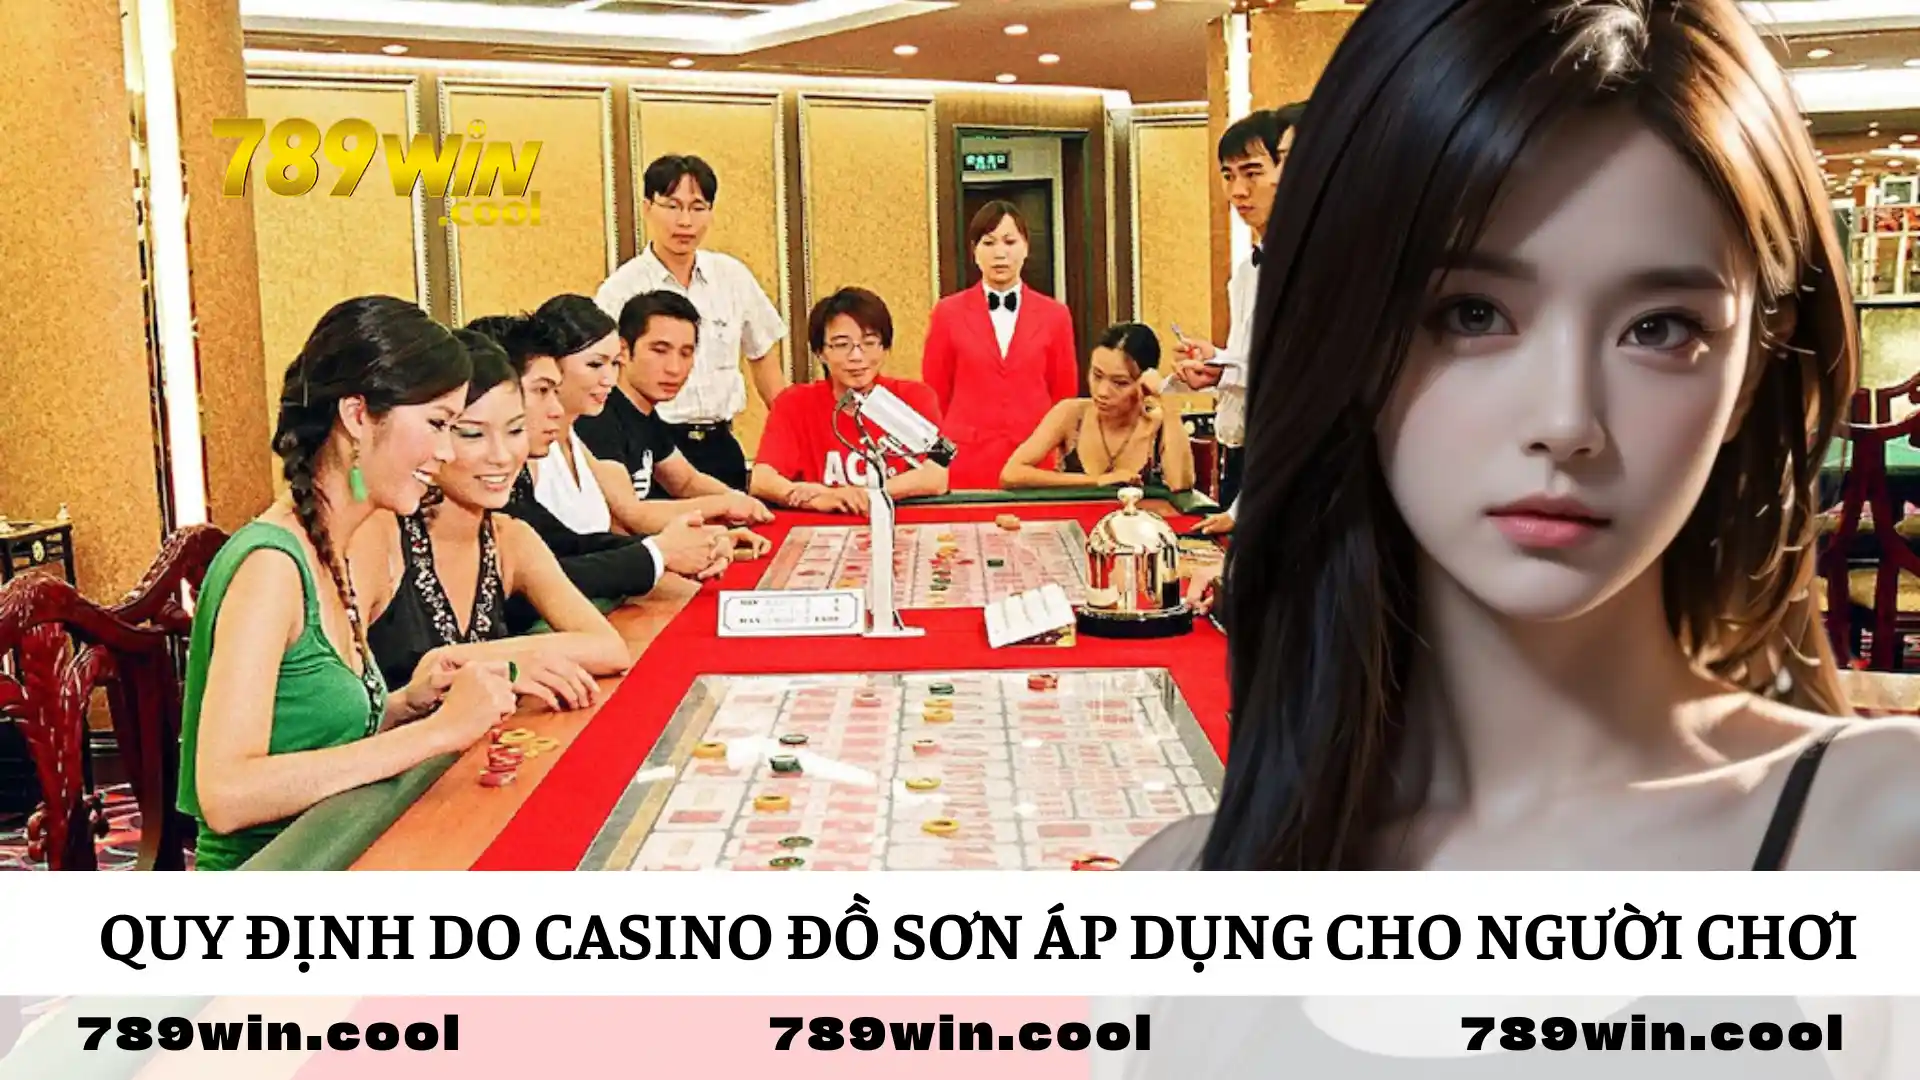 casino-do-son-luon-dua-ra-quy-dinh-danh-cho-nguoi-choi